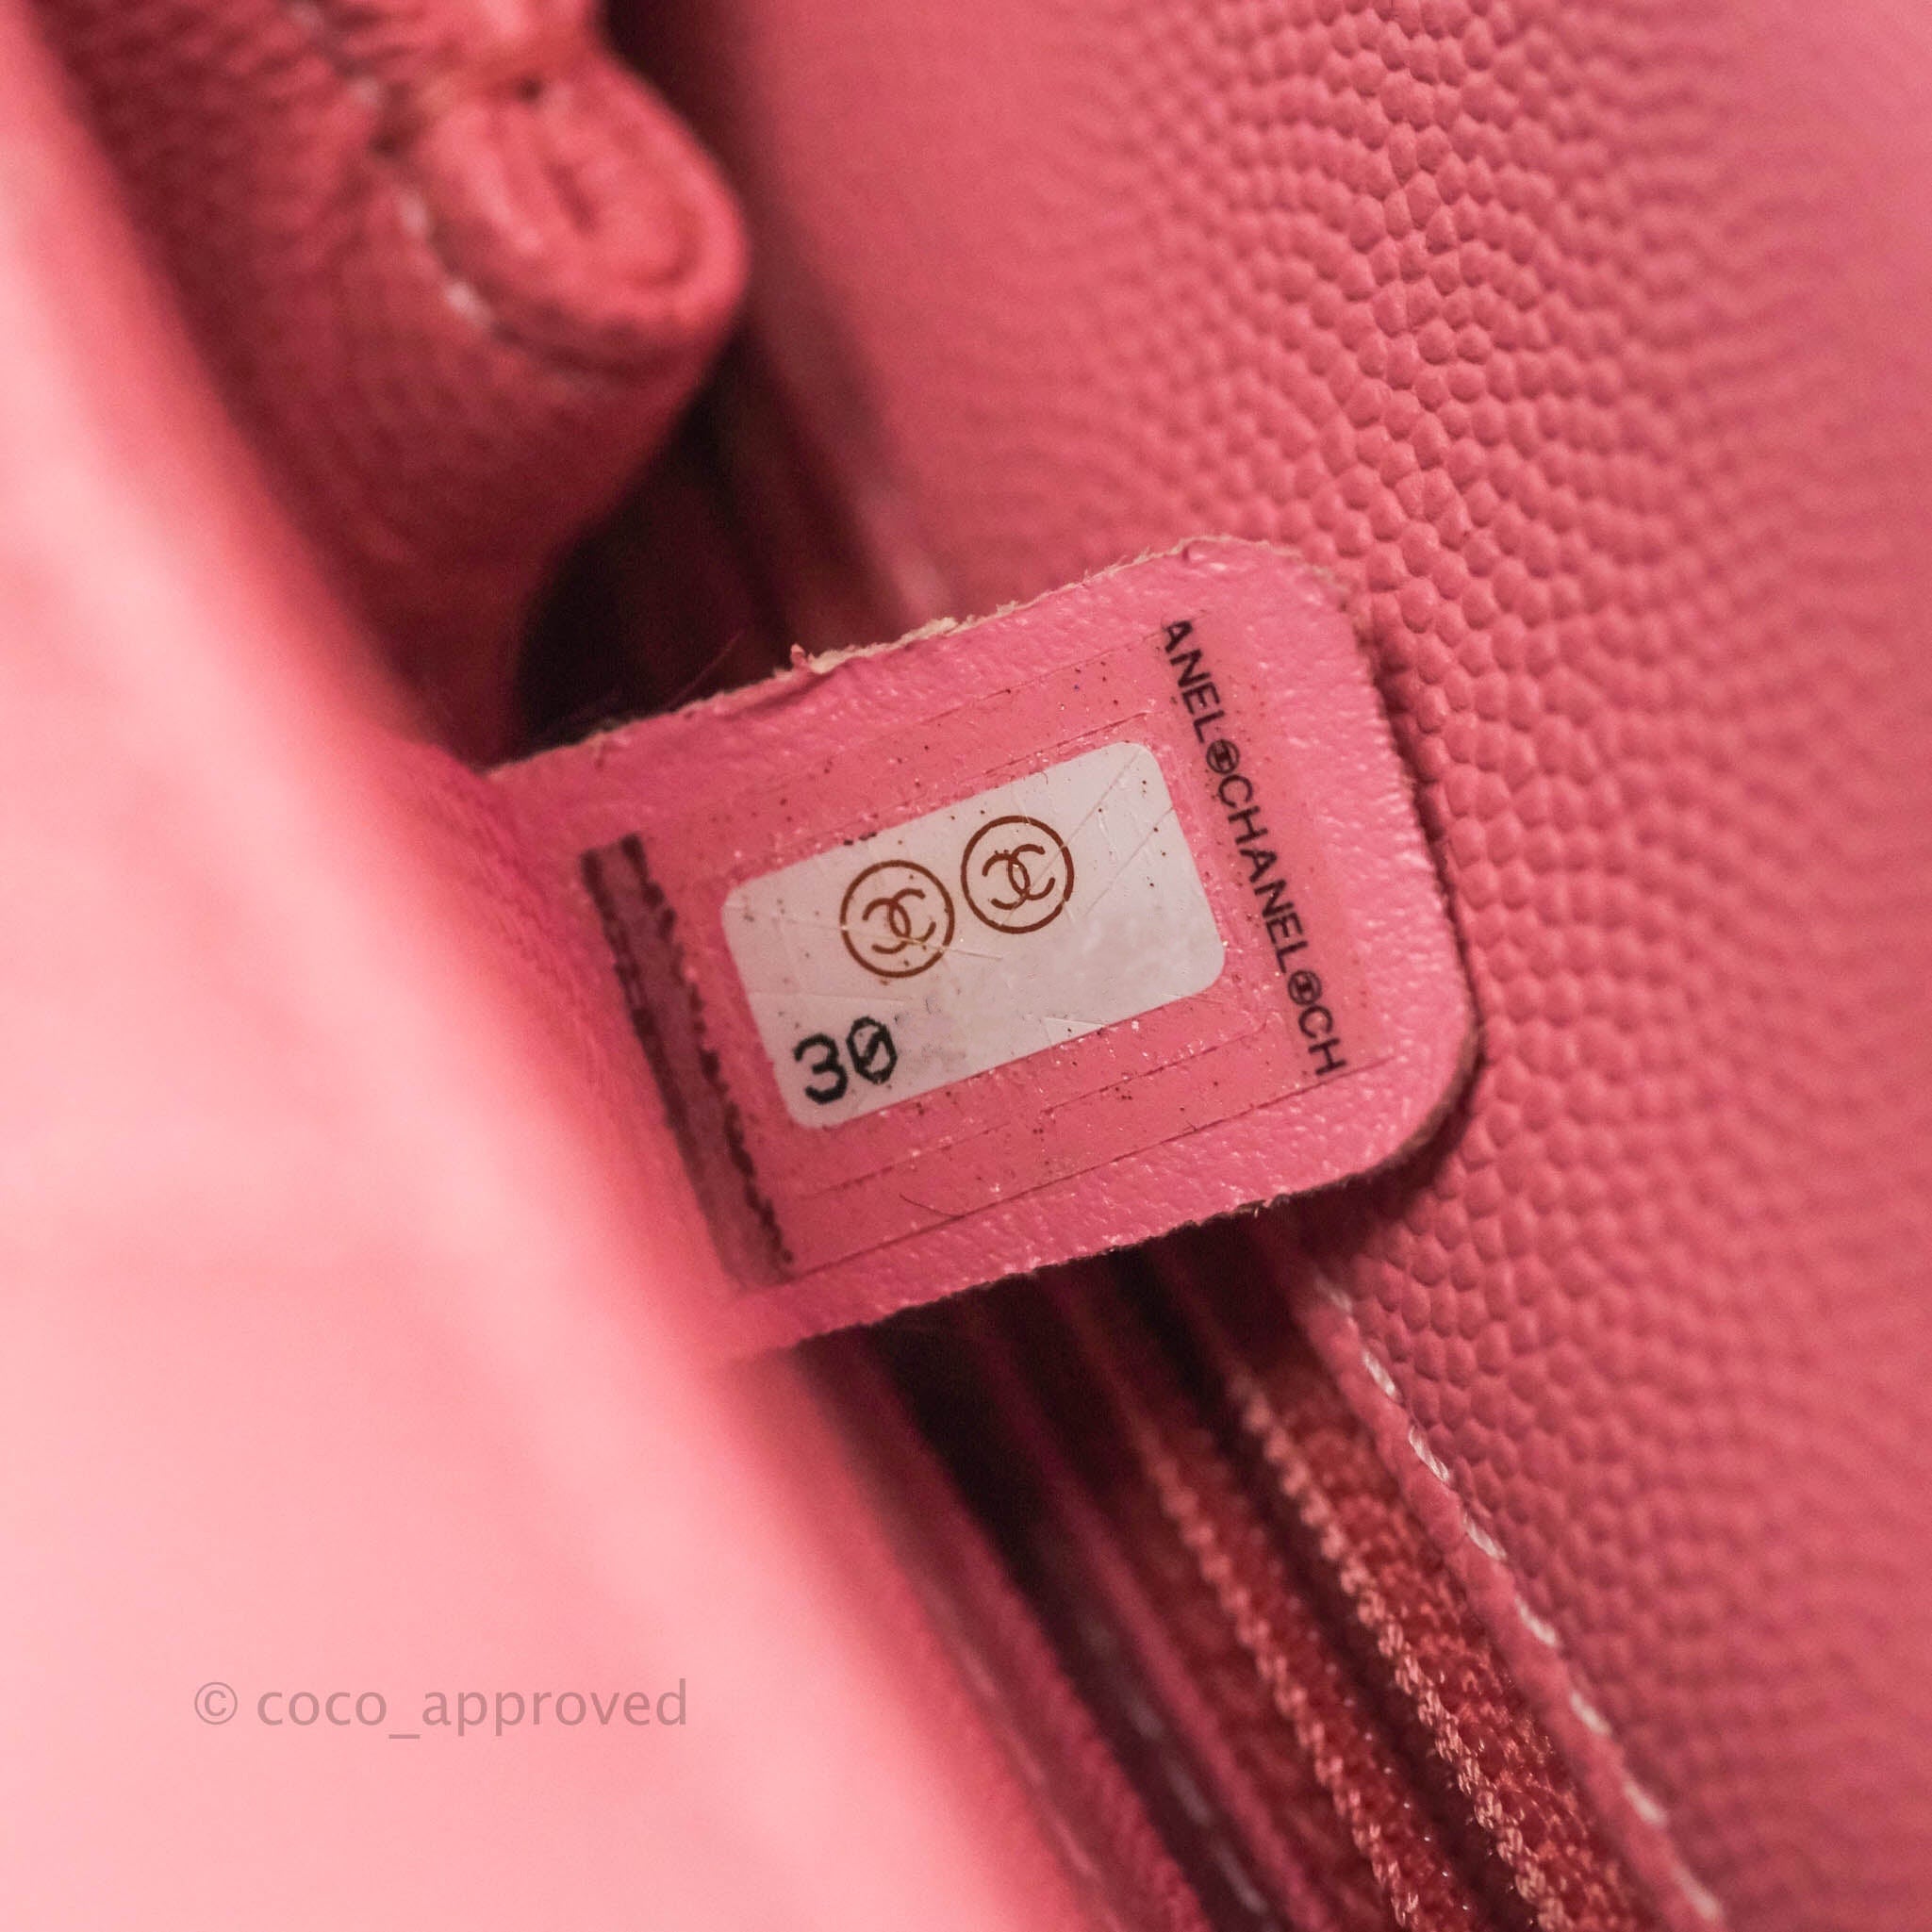 Chanel M22751 Capushell Mini , Pink, One Size